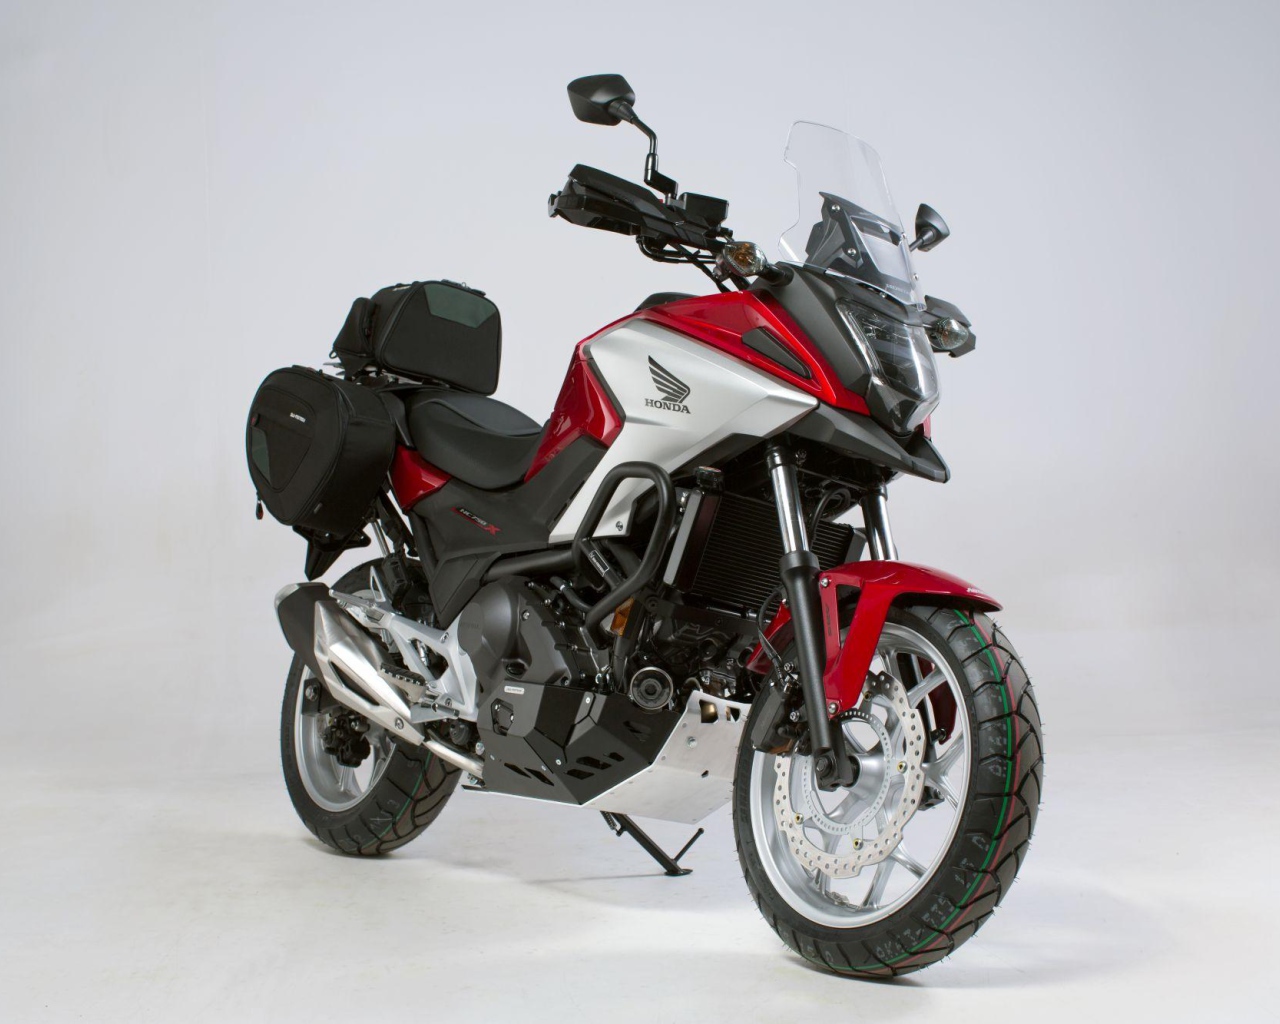 Мотоцикл Honda NC750X, 2021 года на сером фоне